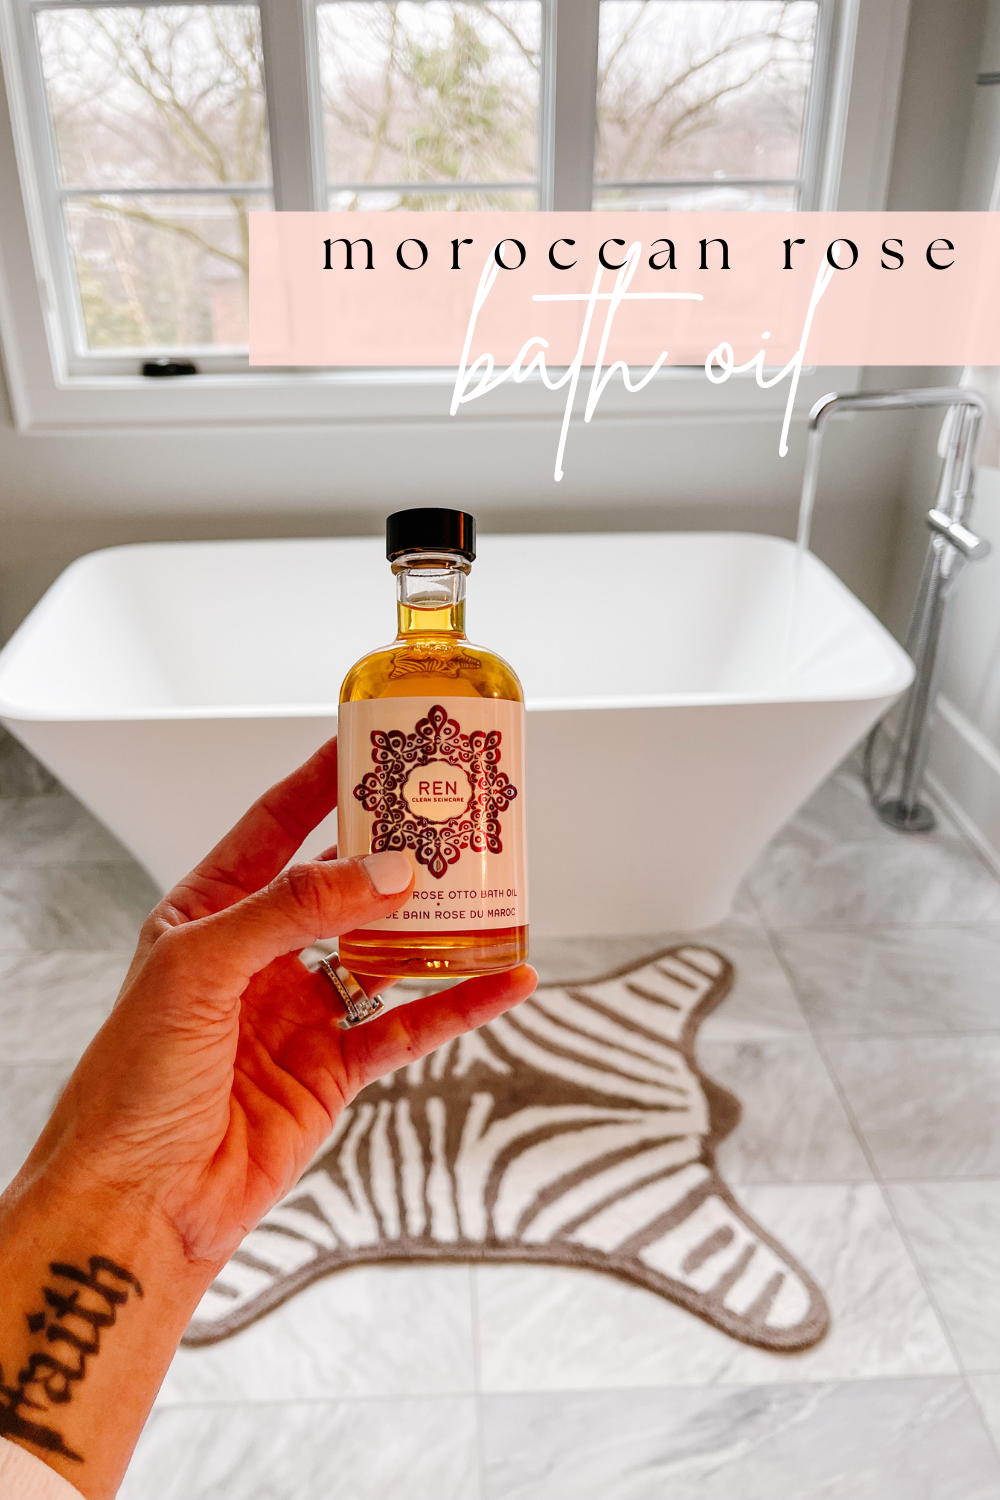 Morocan rose bath oil